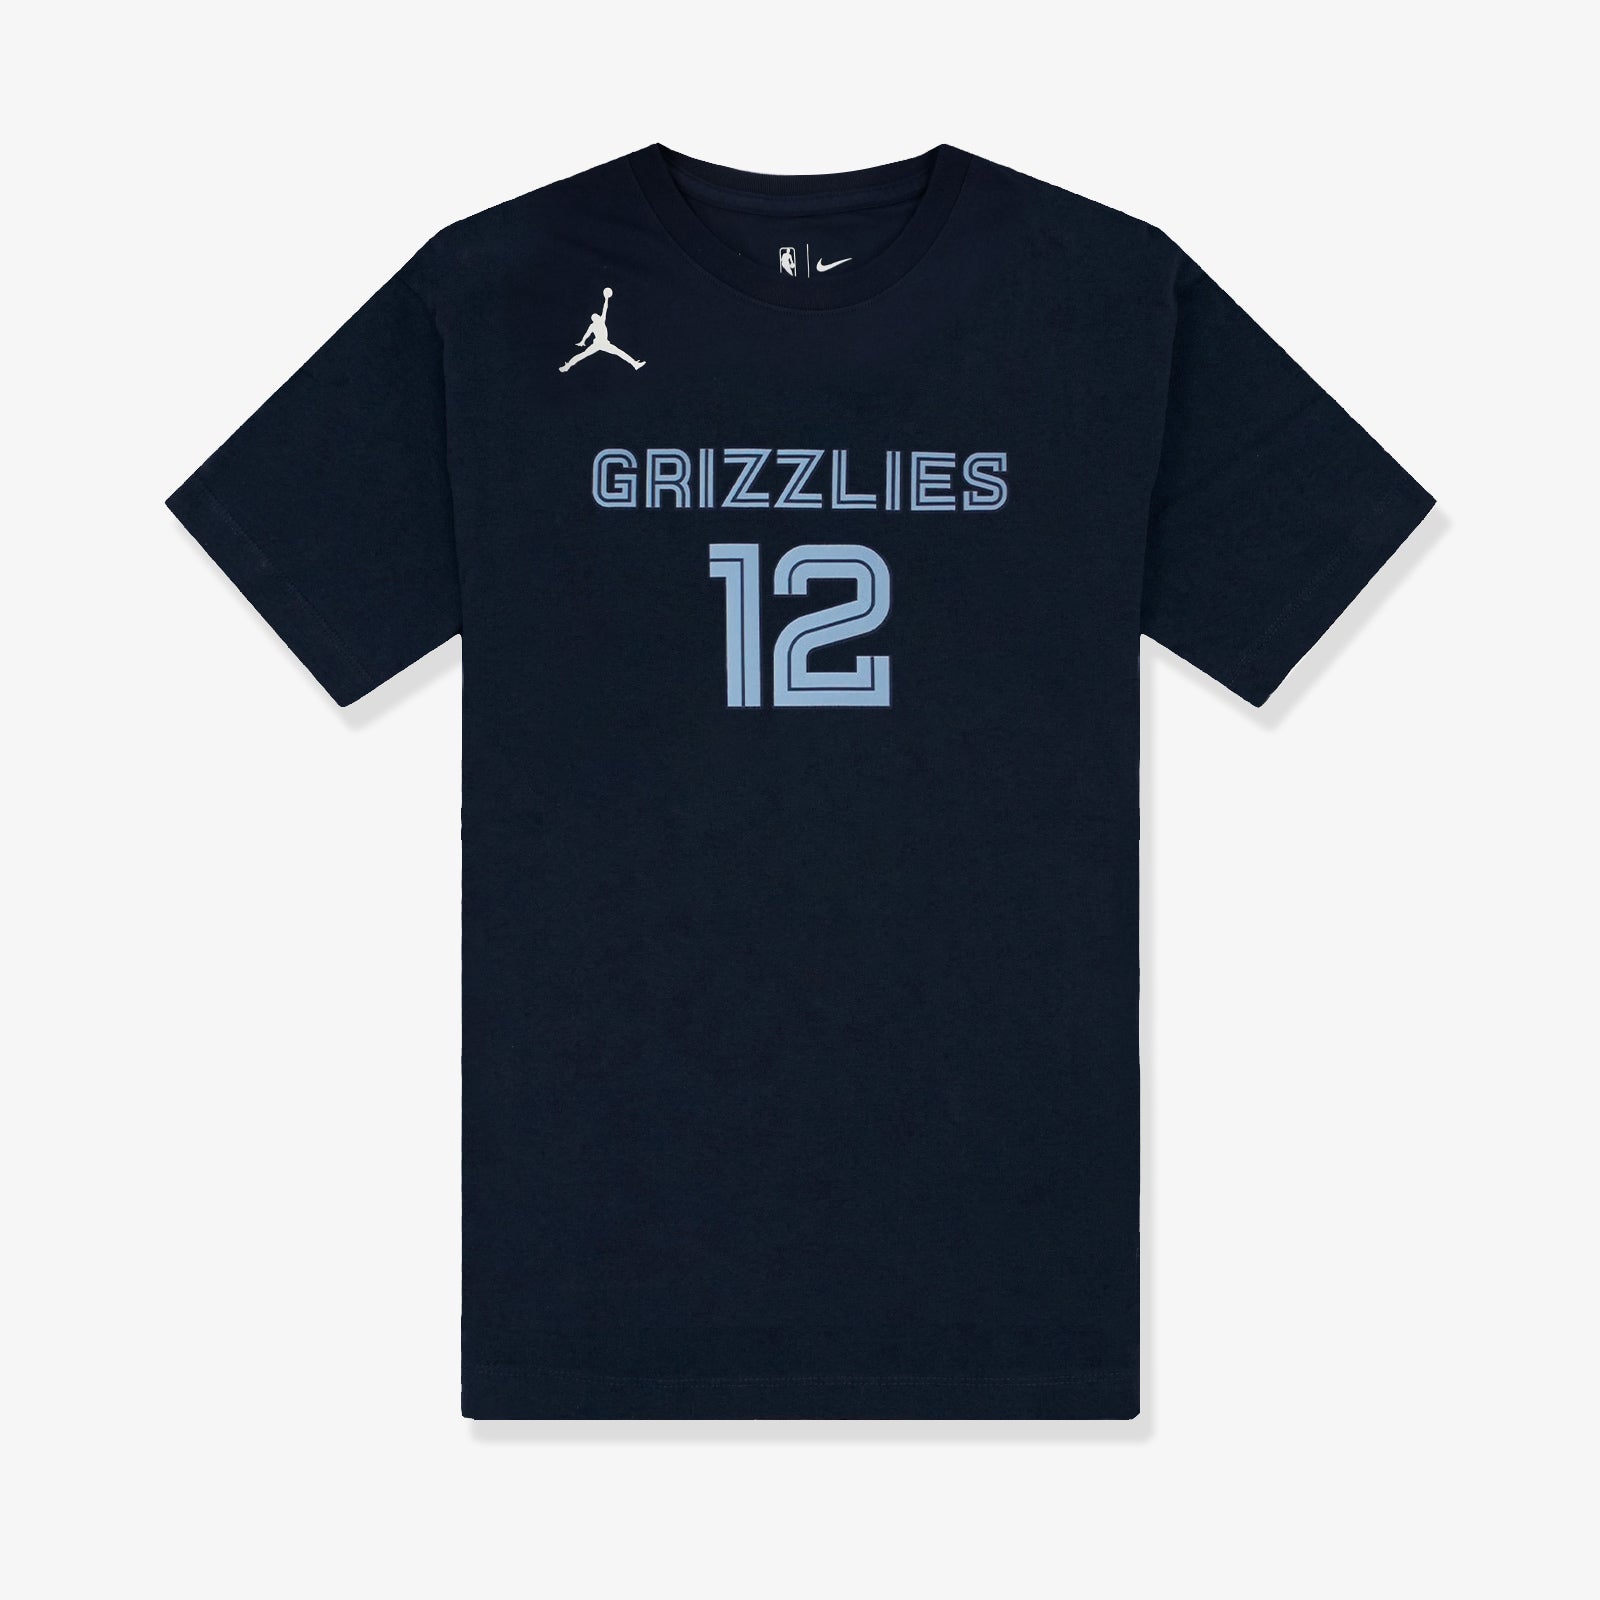 Memphis Grizzlies Men's Nike Statement Jersey #12 Morant